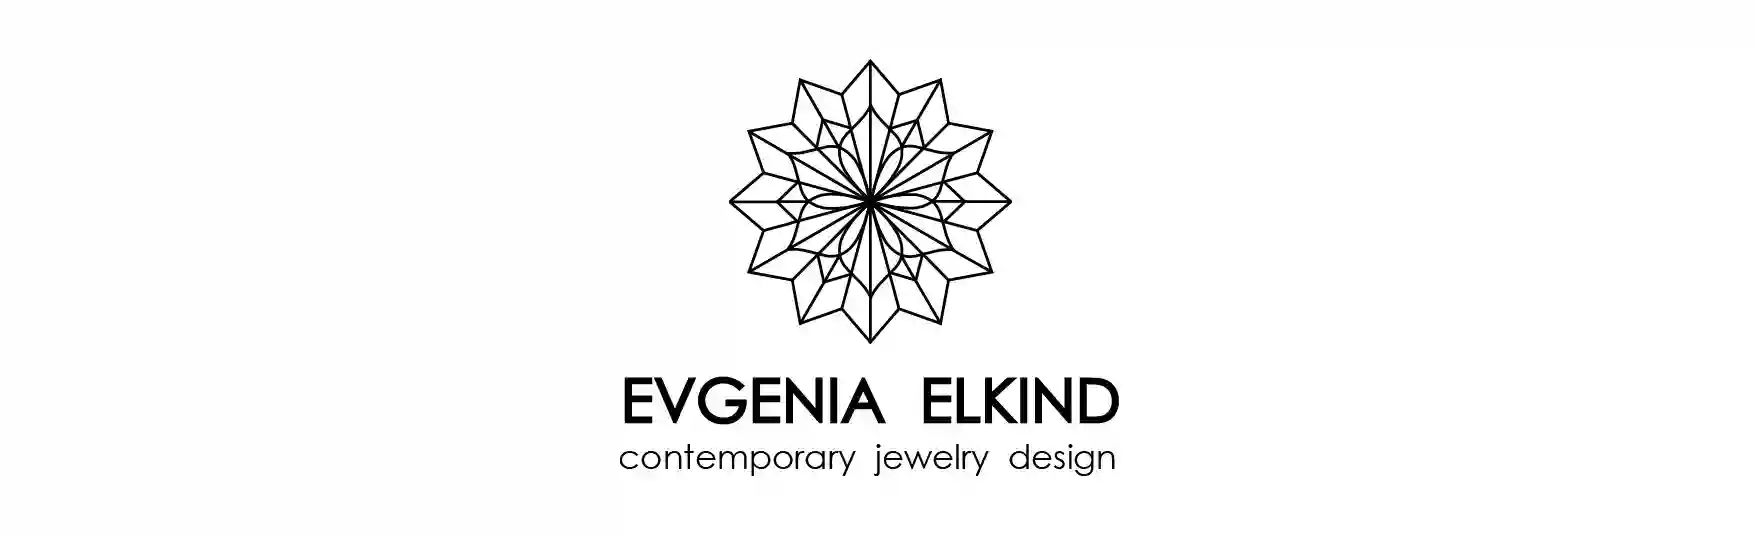 Jewelry Designer . Evgenia Elkind